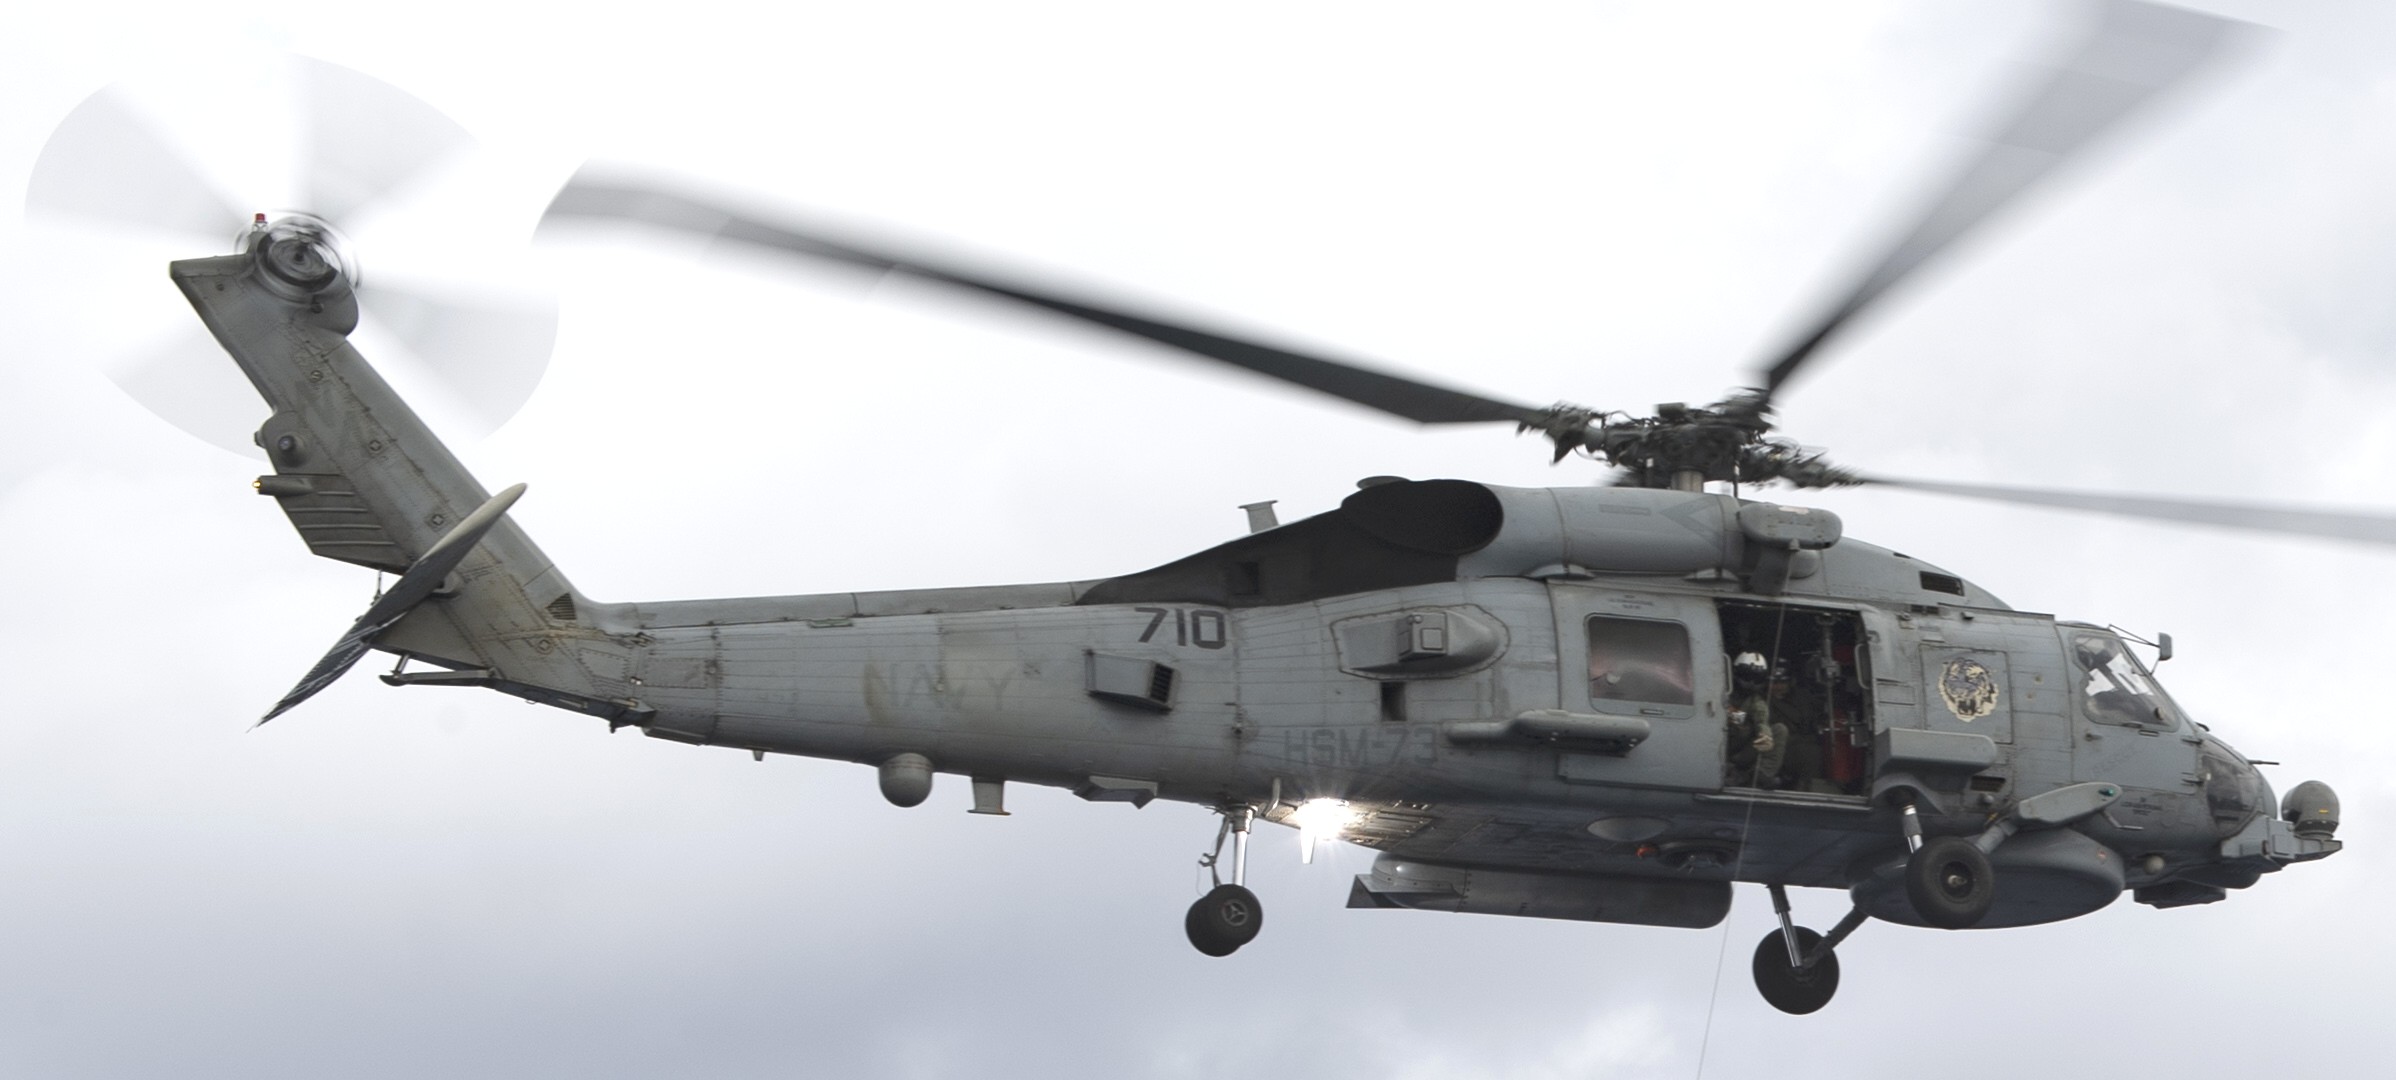 hsm-73 battlecats helicopter maritime strike squadron mh-60r seahawk cvw-17 cvn-68 uss nimitz 59